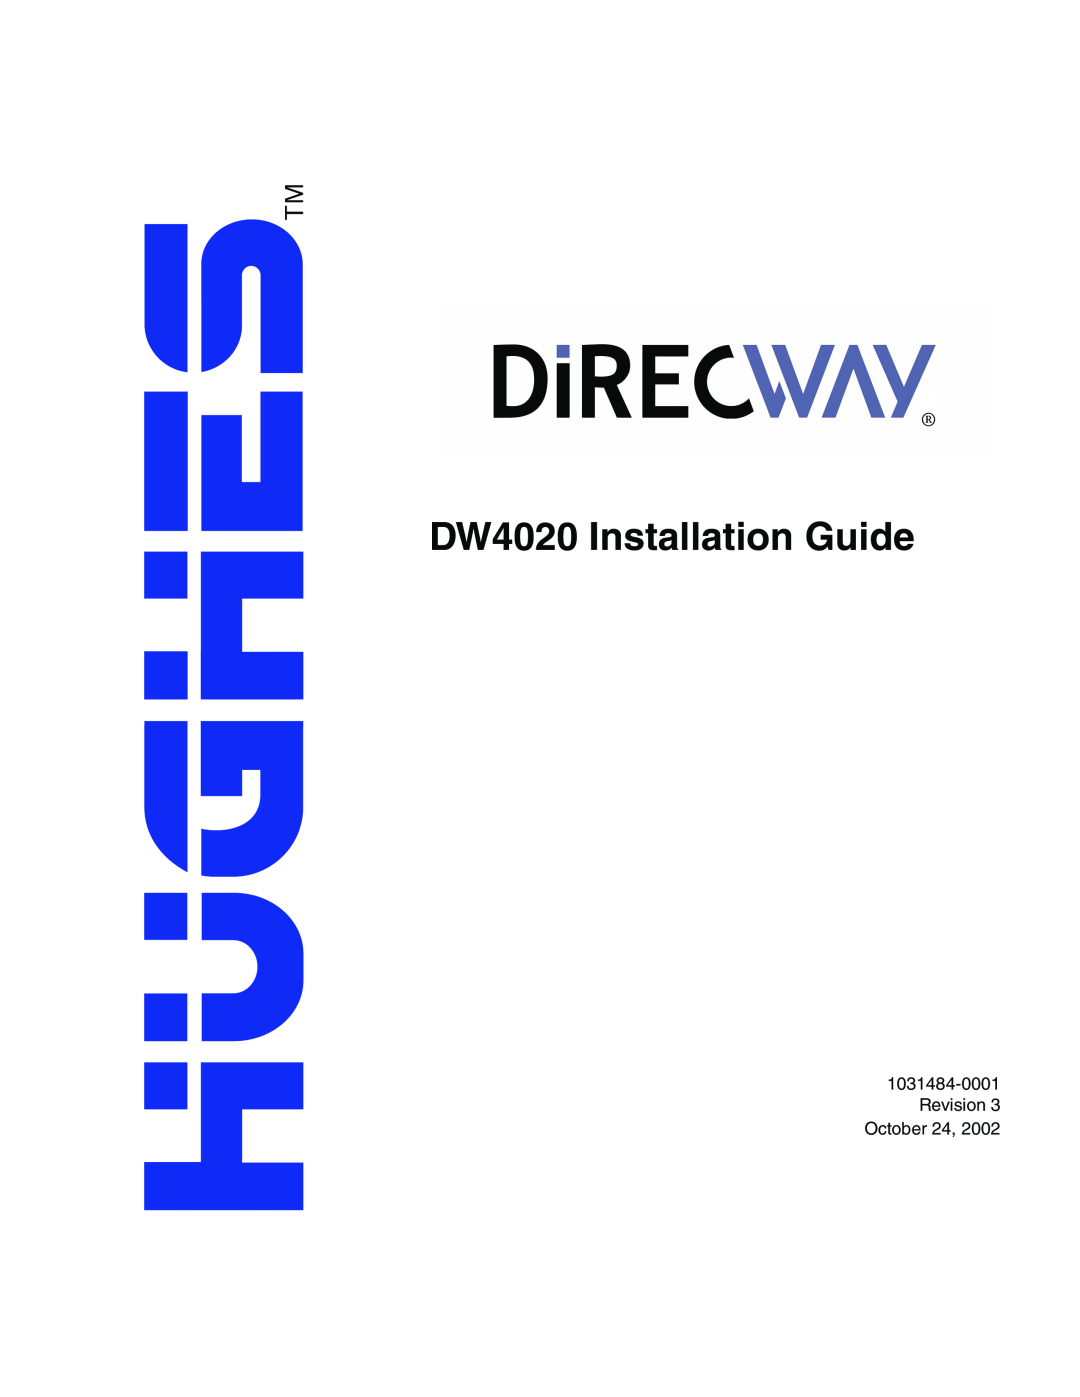 Hughes manual DW4020 Installation Guide, Revision 3 October 24 